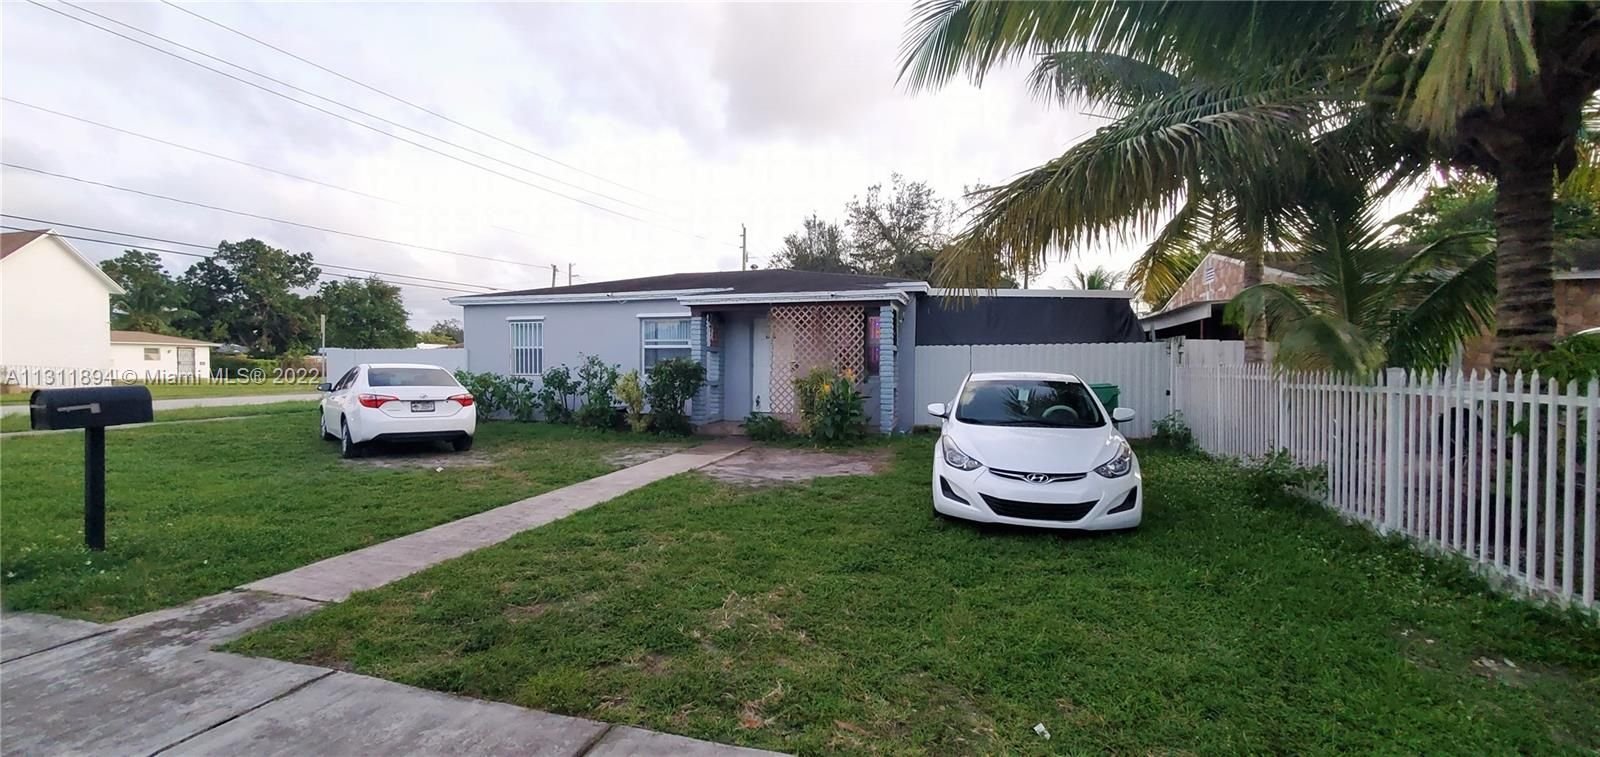 Real estate property located at 2400 59th St, Miami-Dade County, Miami, FL